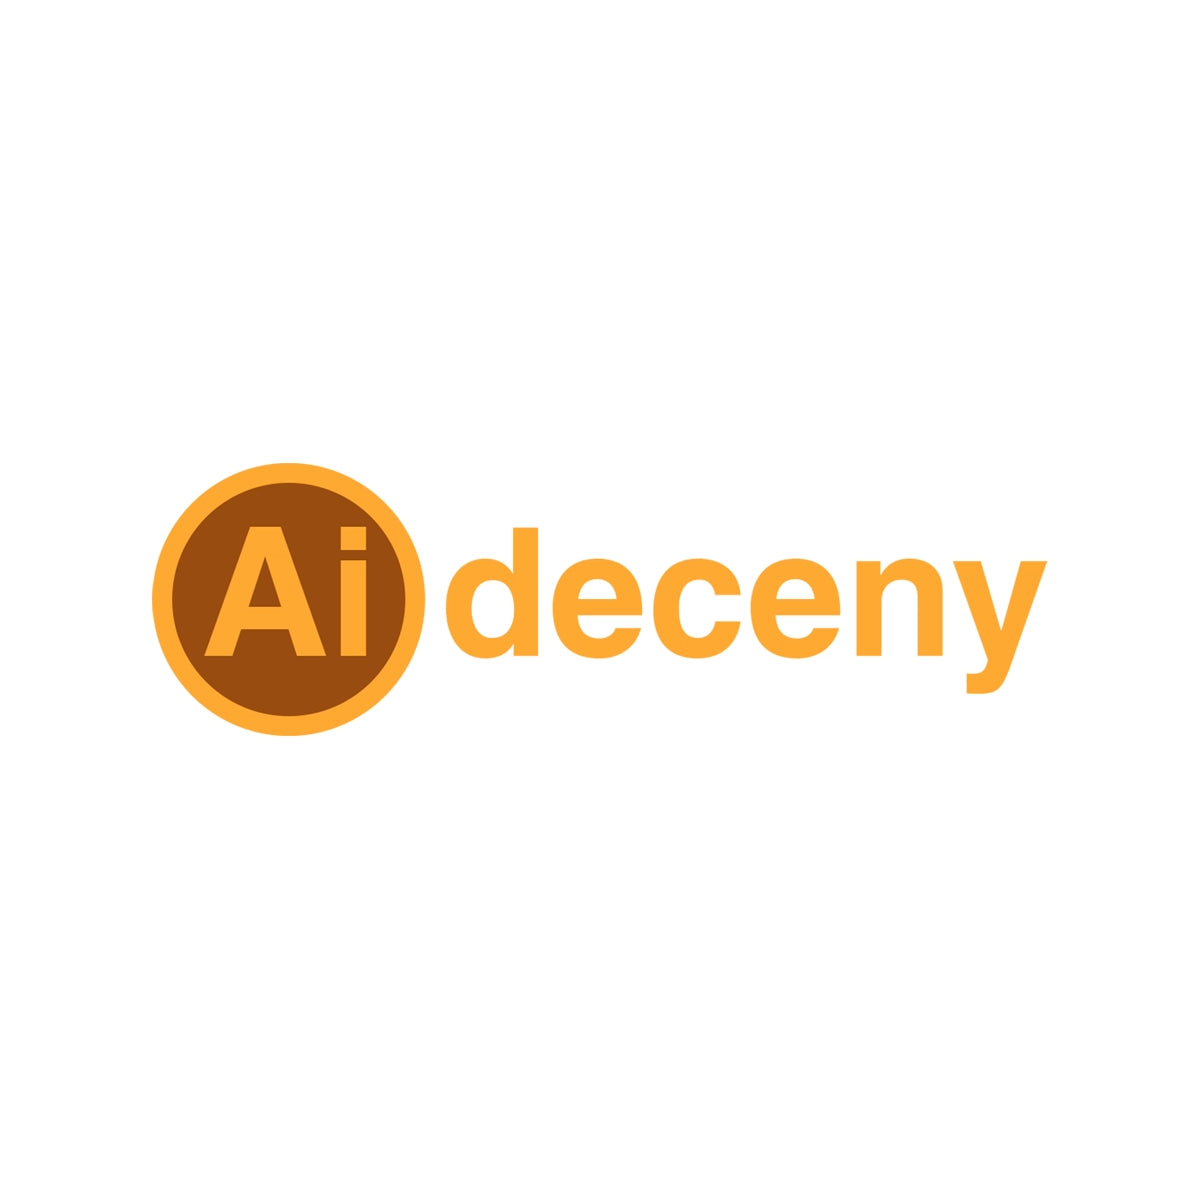 aidecency.com